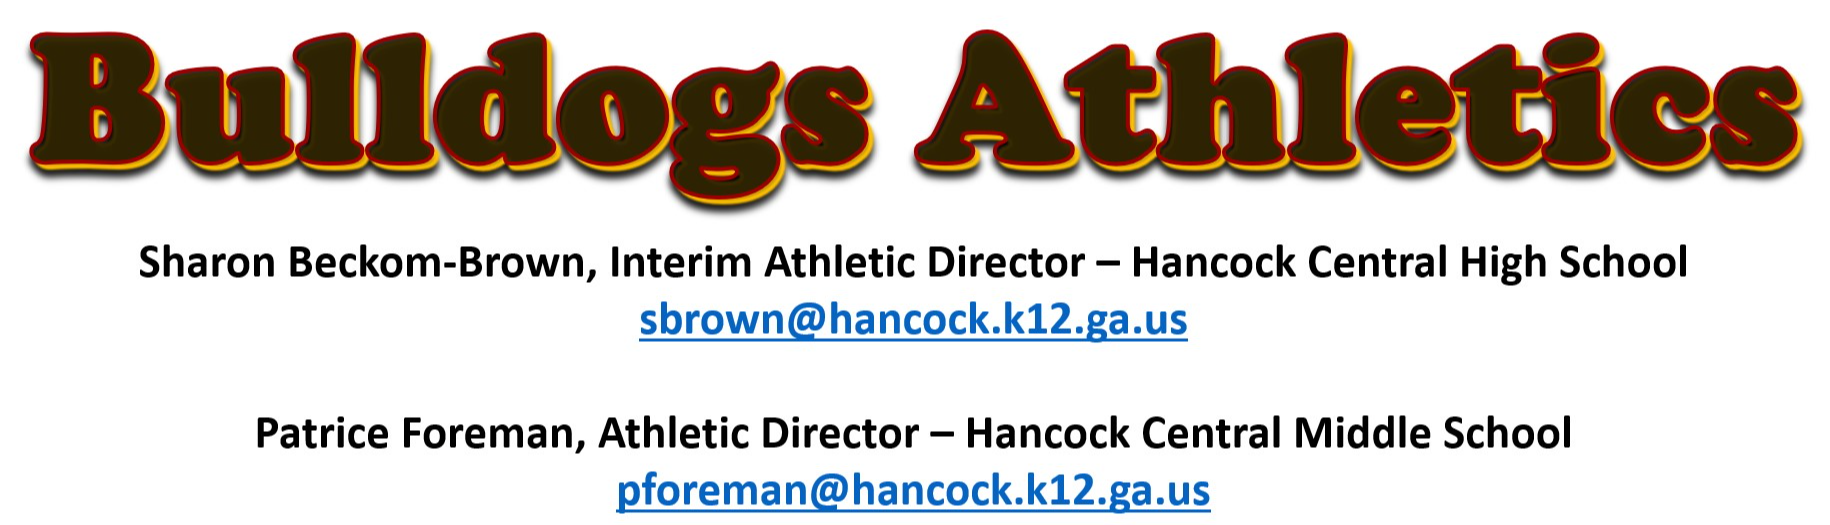 Bulldogs Athletics Banner